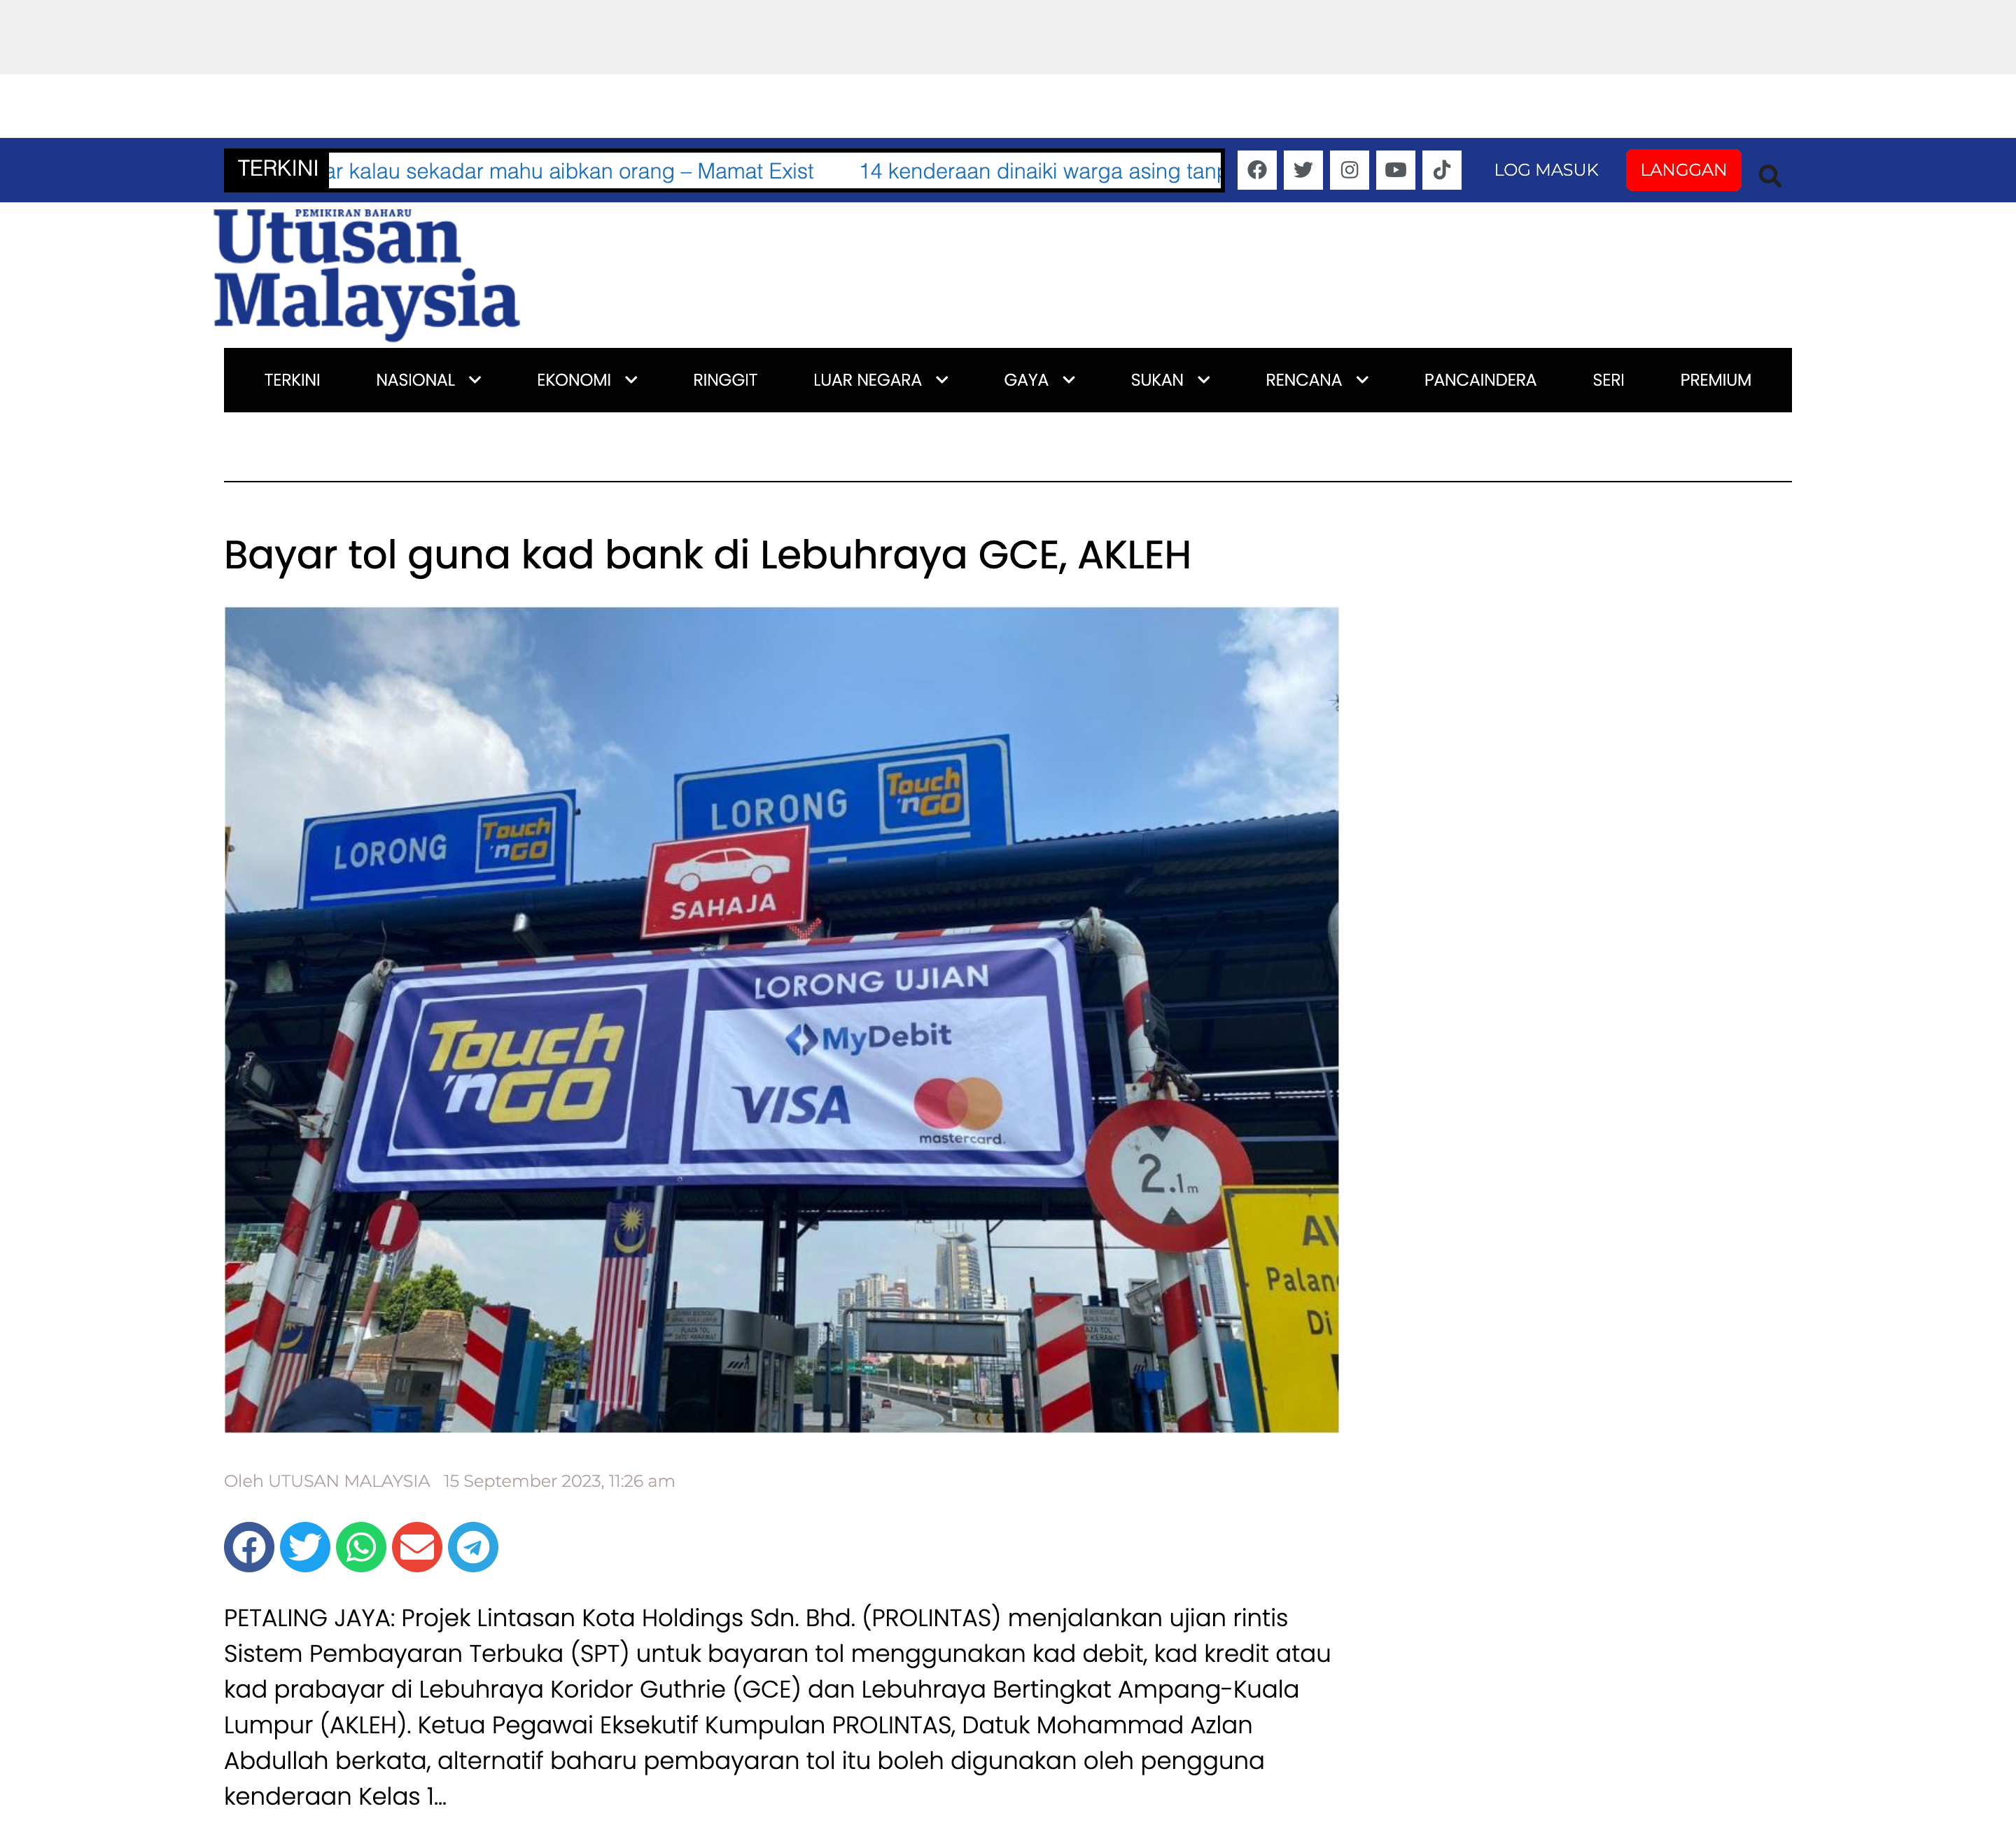 UTUSAN MALAYSIA | BAYAR TOL GUNA KAD BANK DI LEBUHRAYA GCE, AKLEH